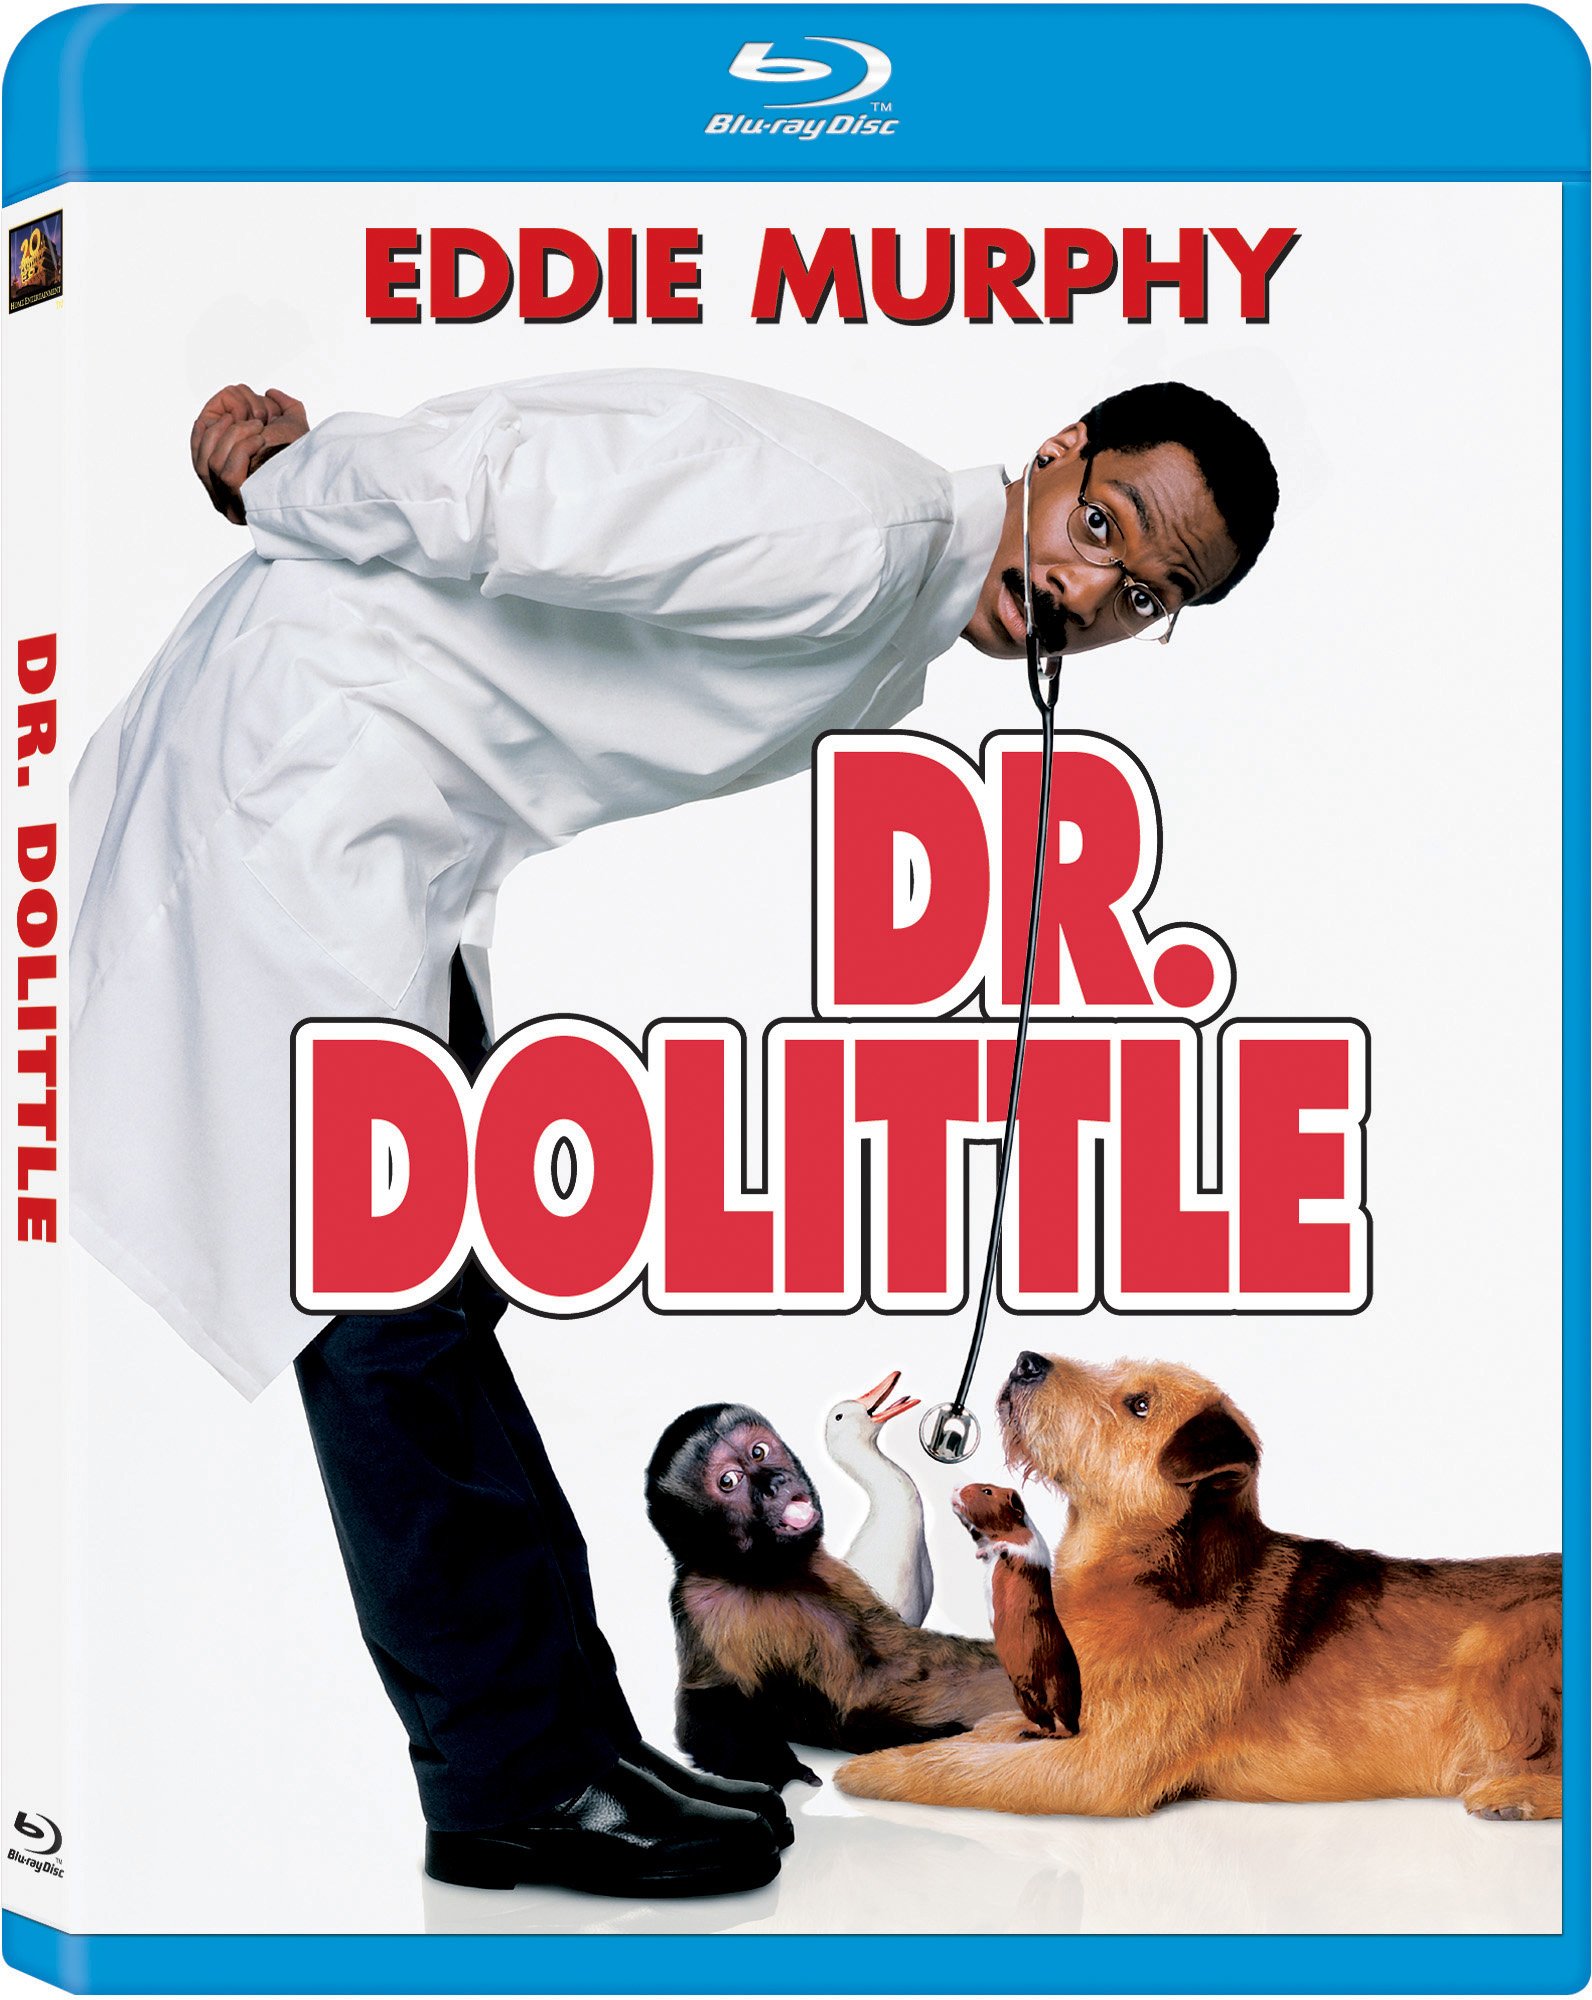 Комедии про врачей. Doctor Dolittle 1998. Доктор Дулиттл DVD. Эдди Мерфи доктор Дулиттл. Доктор Дулиттл 6.